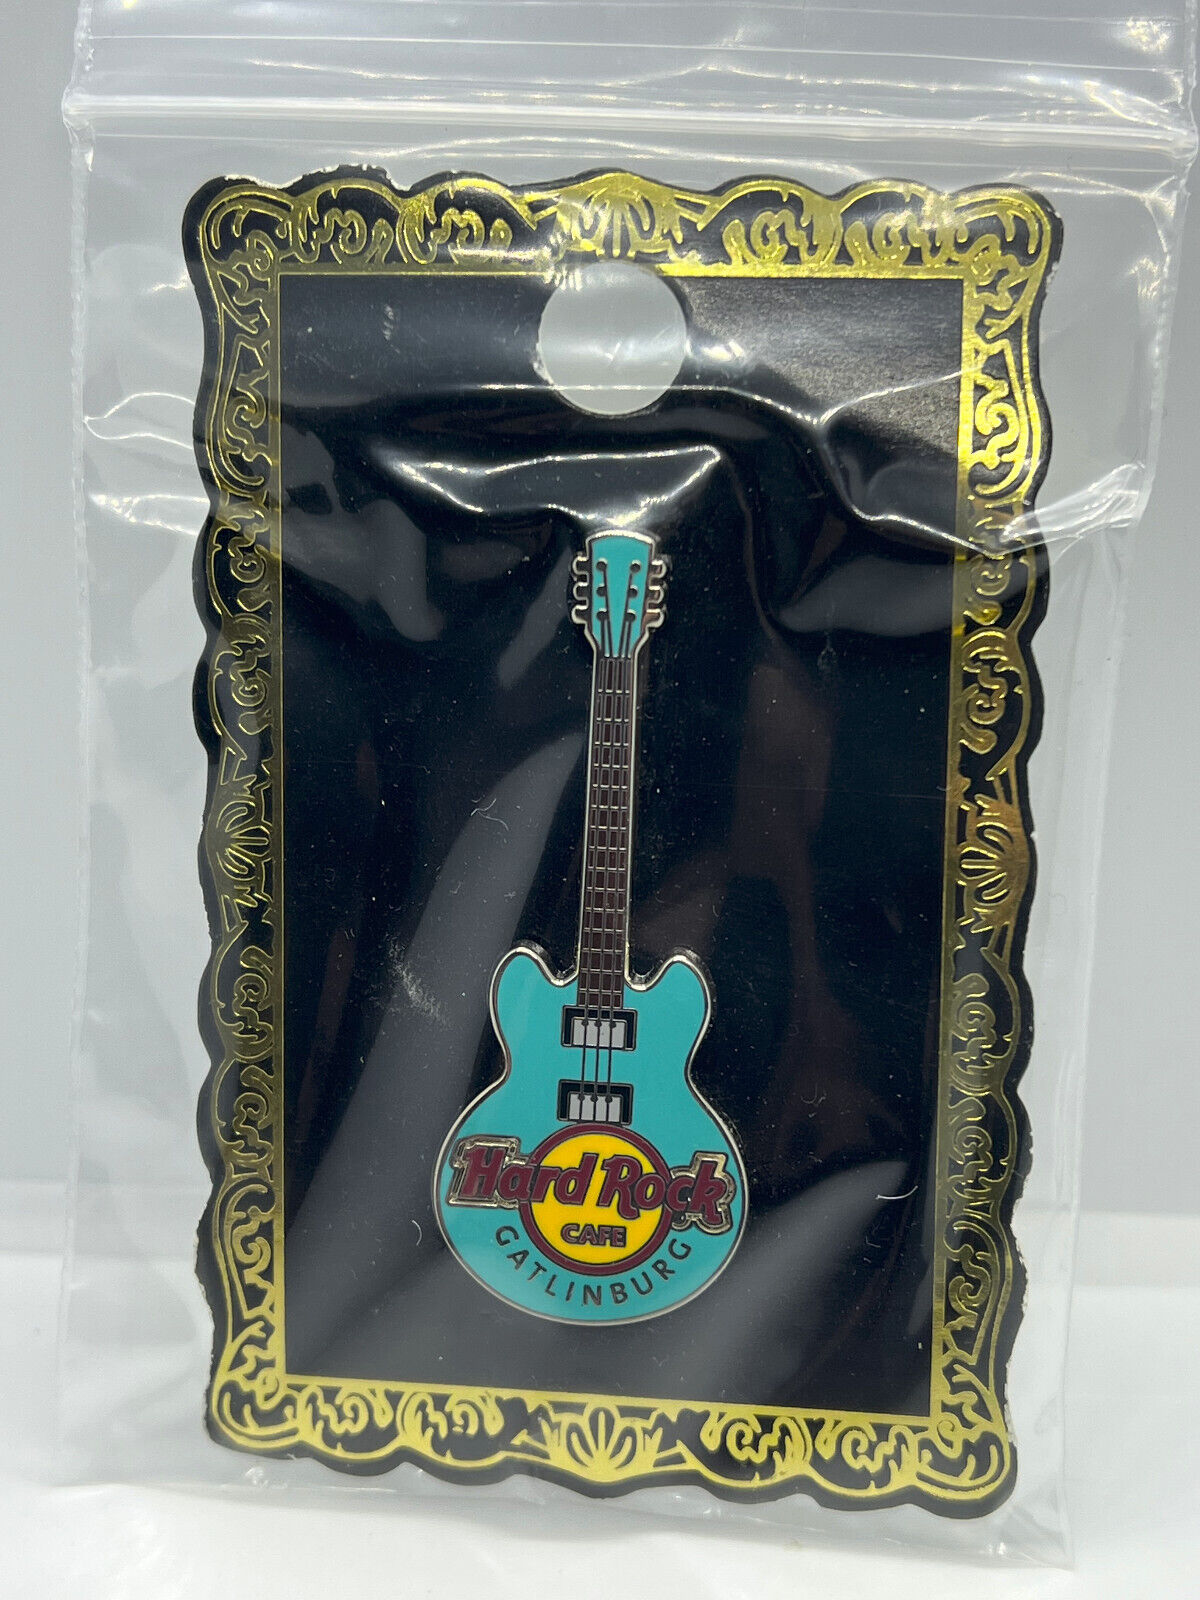 Hard Rock Cafe Gatlinburg Teal Core Guitar Pin on Card